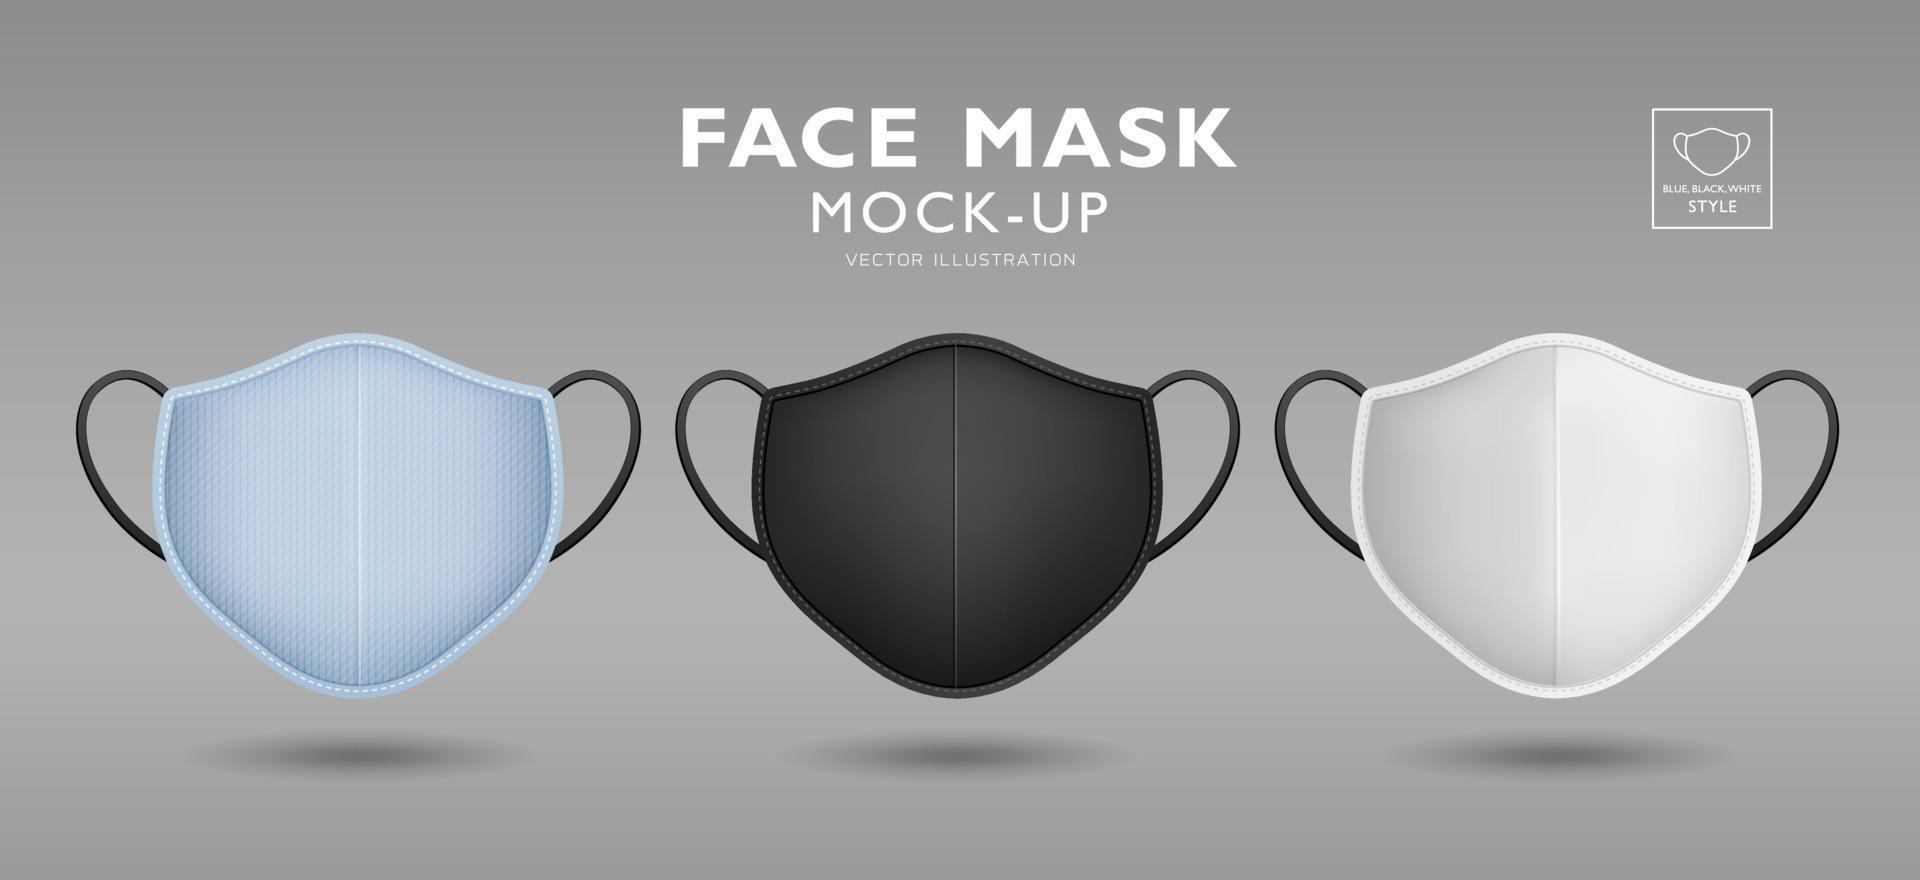 cara máscara tela azul, negro, blanco color burlarse de arriba frente modelo diseño, en gris fondo, eps 10 vector ilustración